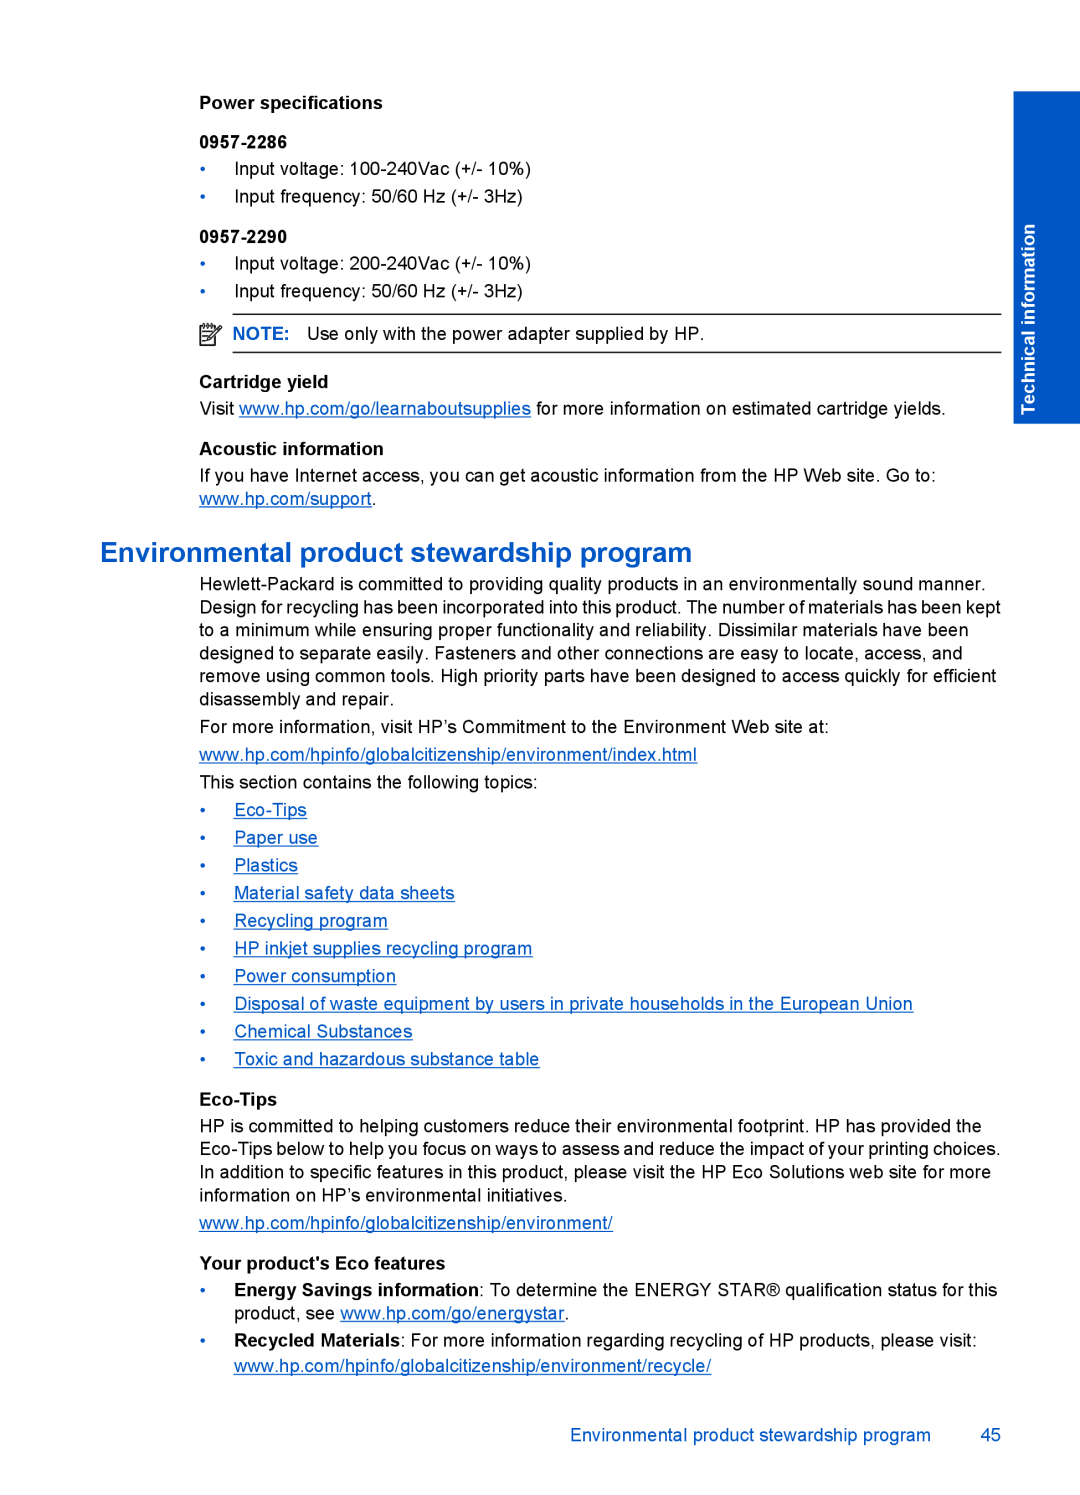 HP 1055 - J410e Environmental product stewardship program, Power specifications 0957-2286, 0957-2290, Cartridge yield 